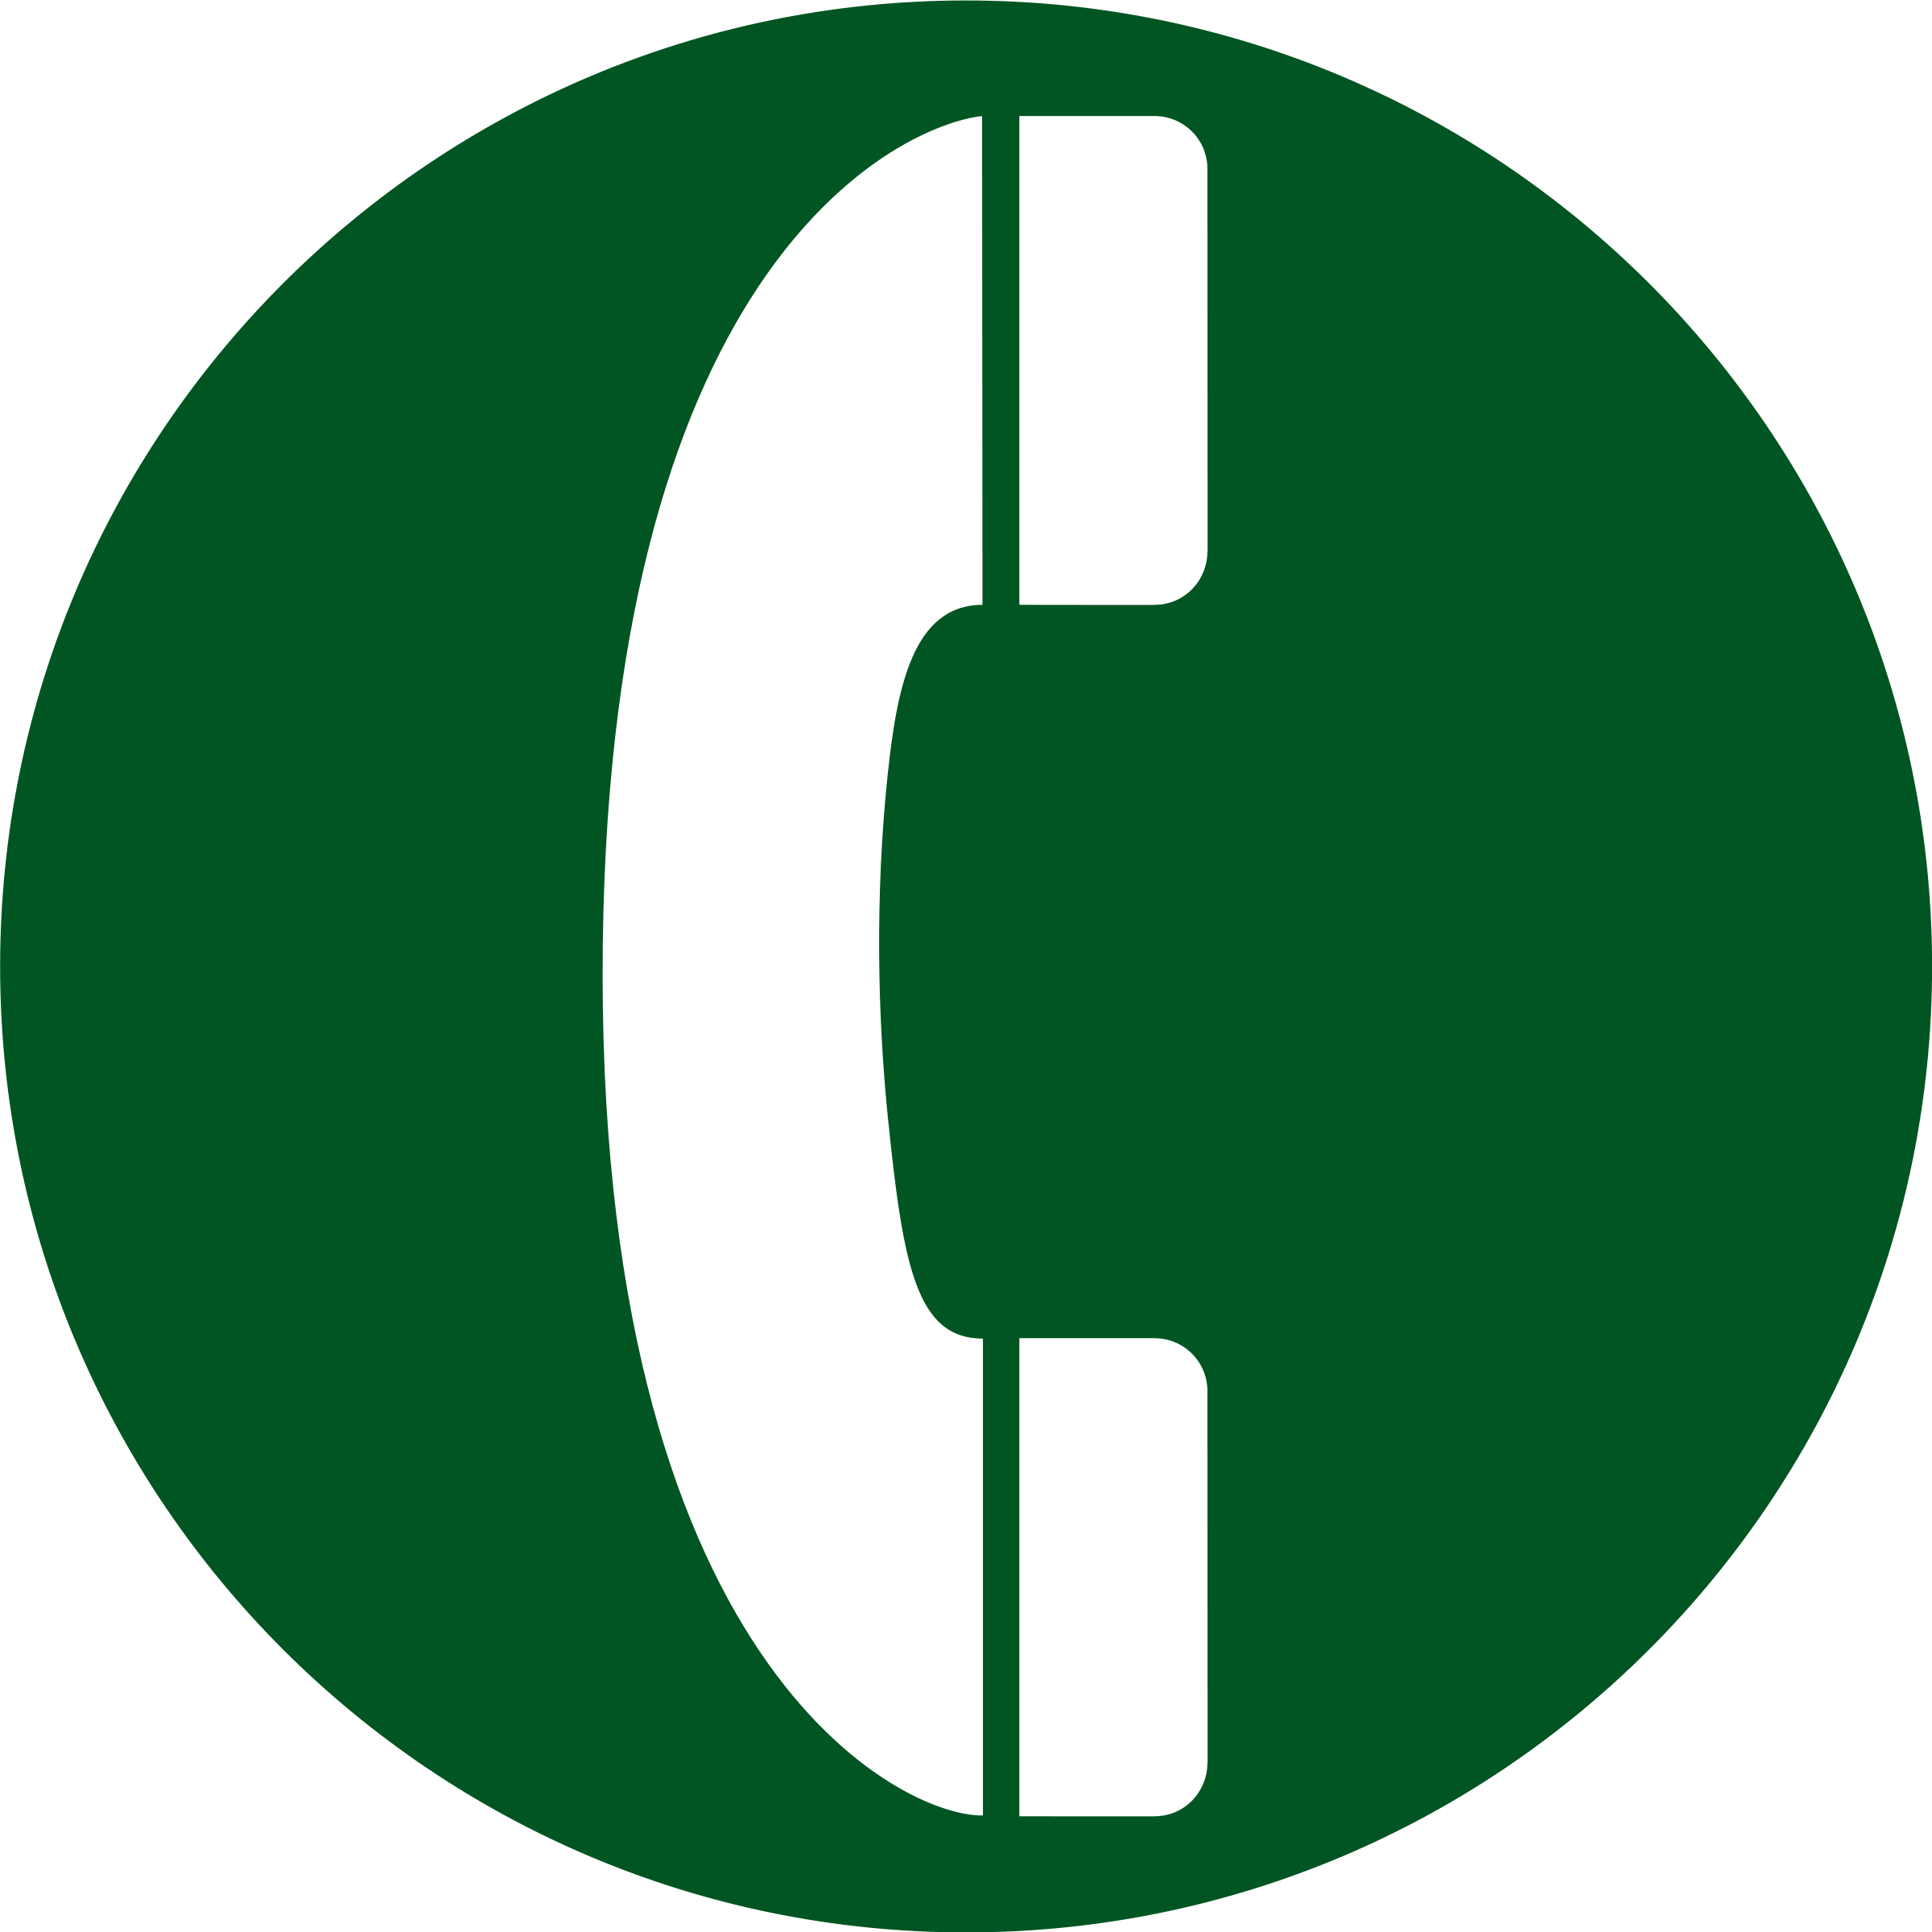 Telephone logo clipart